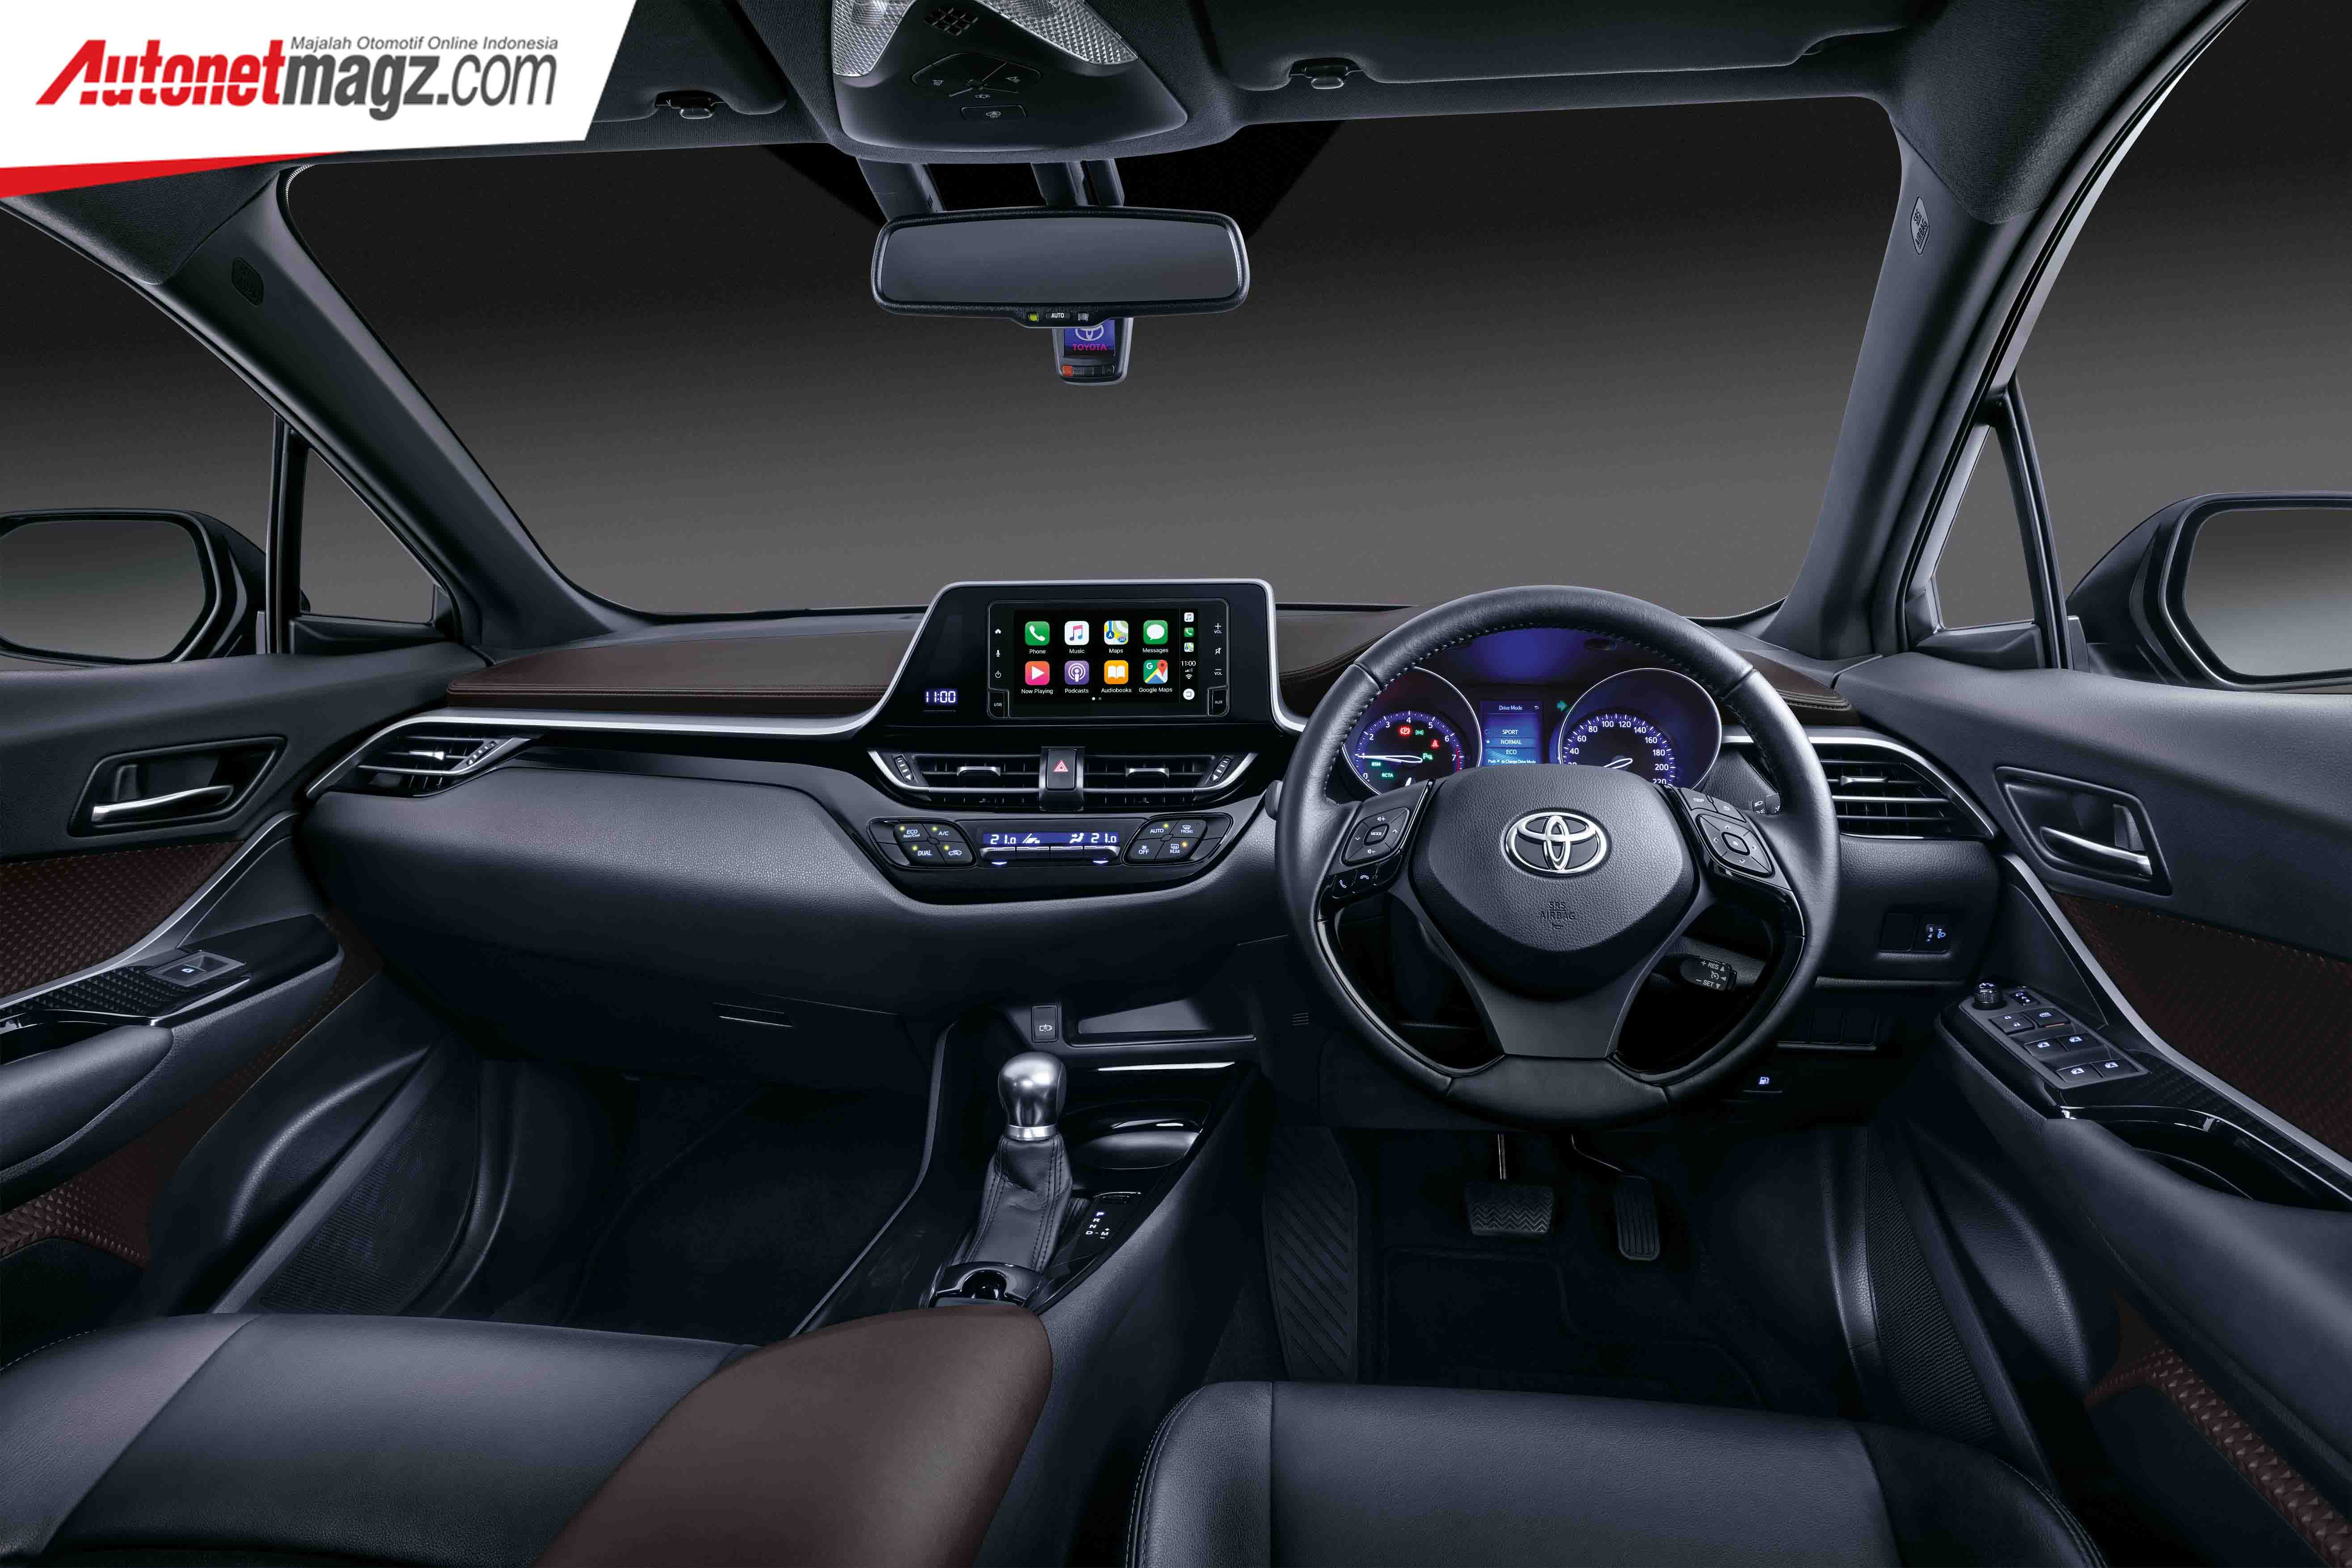 Toyota C HR 2022 interior  AutonetMagz Review Mobil 